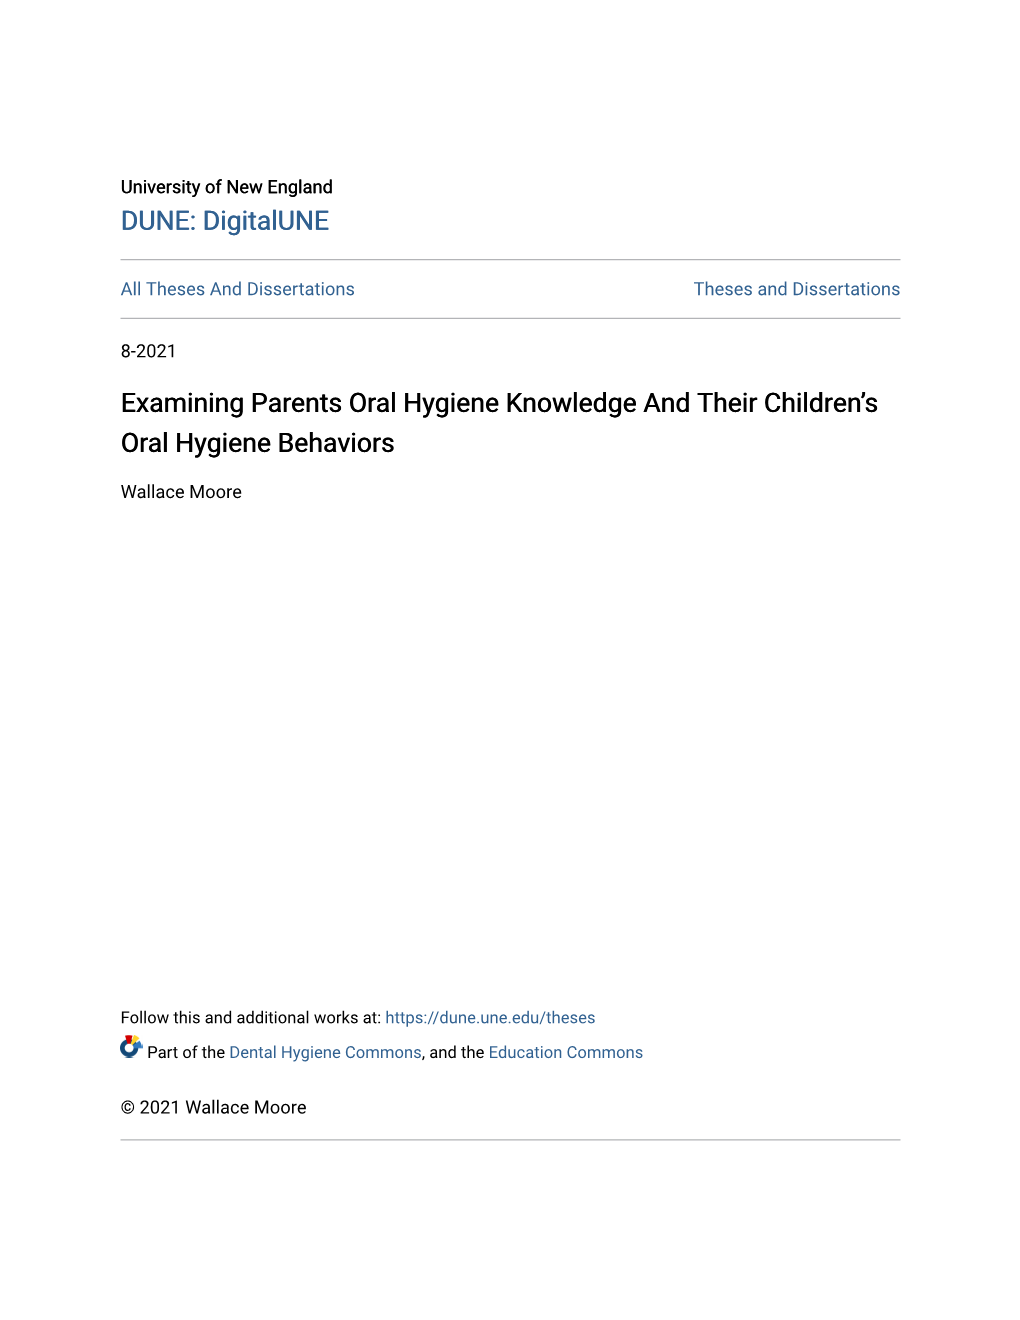 Examining Parents Oral Hygiene Knowledge and Their Children's Oral Hygiene Behaviors